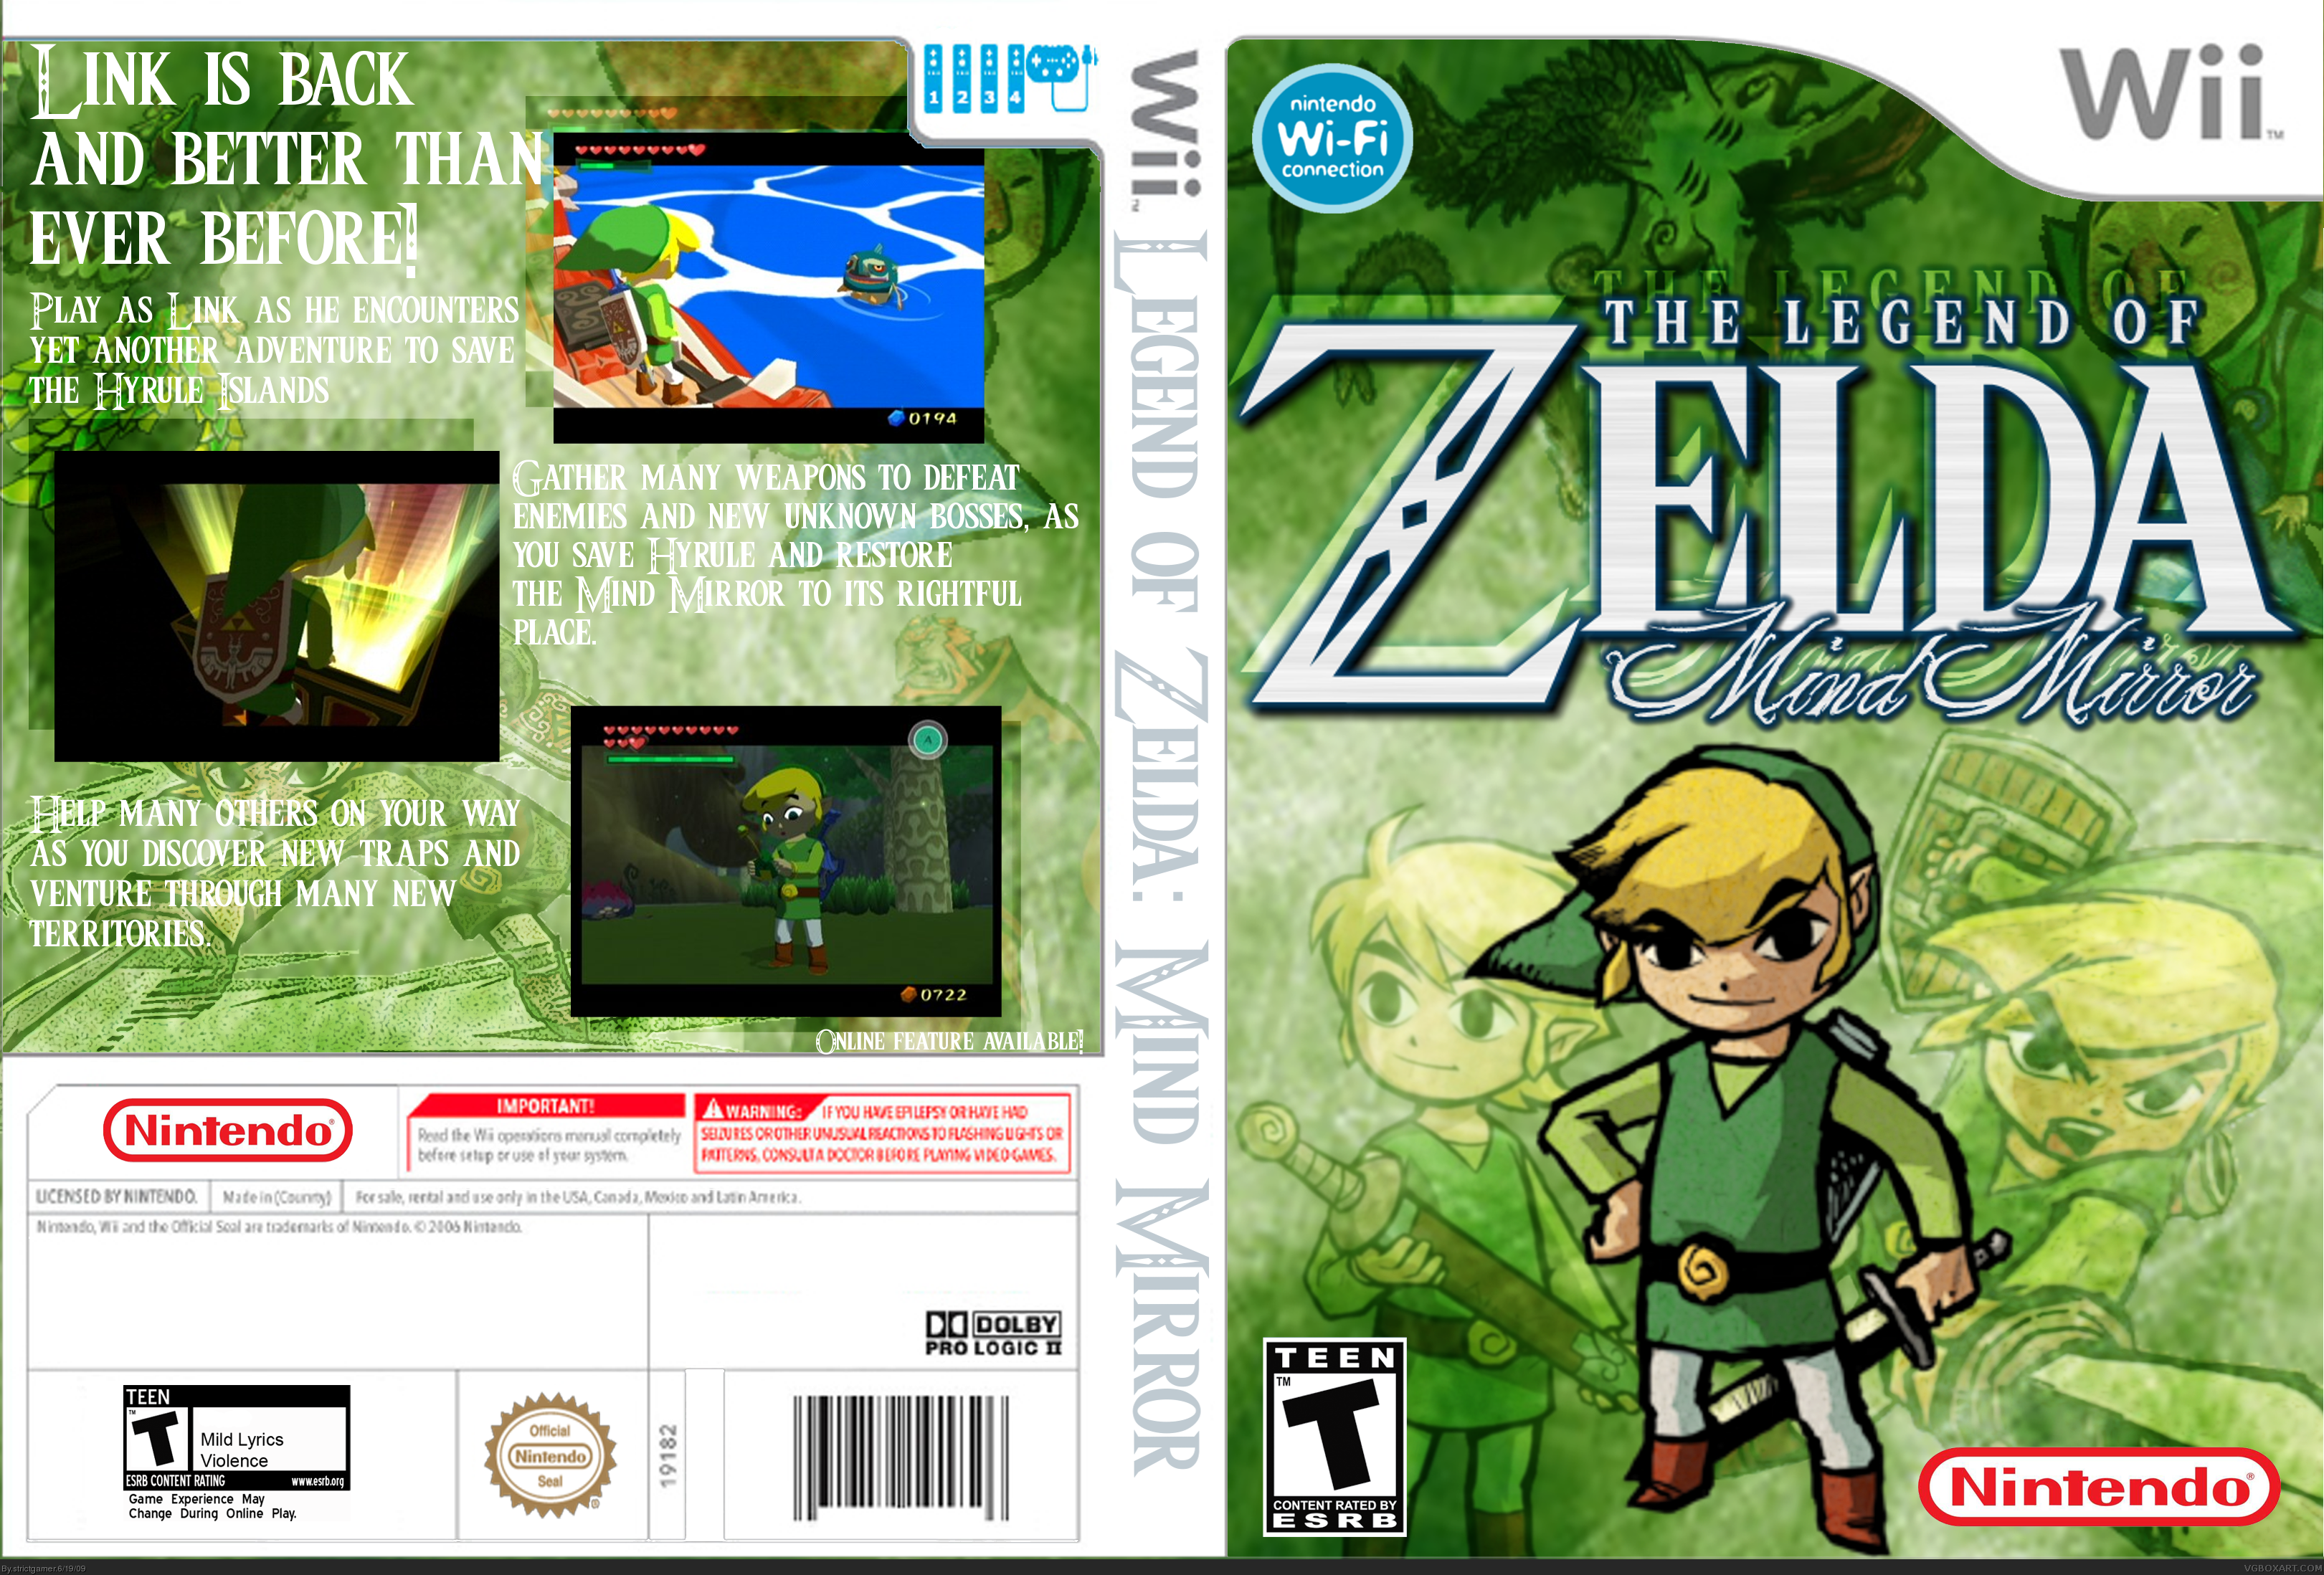 The Legend of Zelda - Mind Mirror box cover